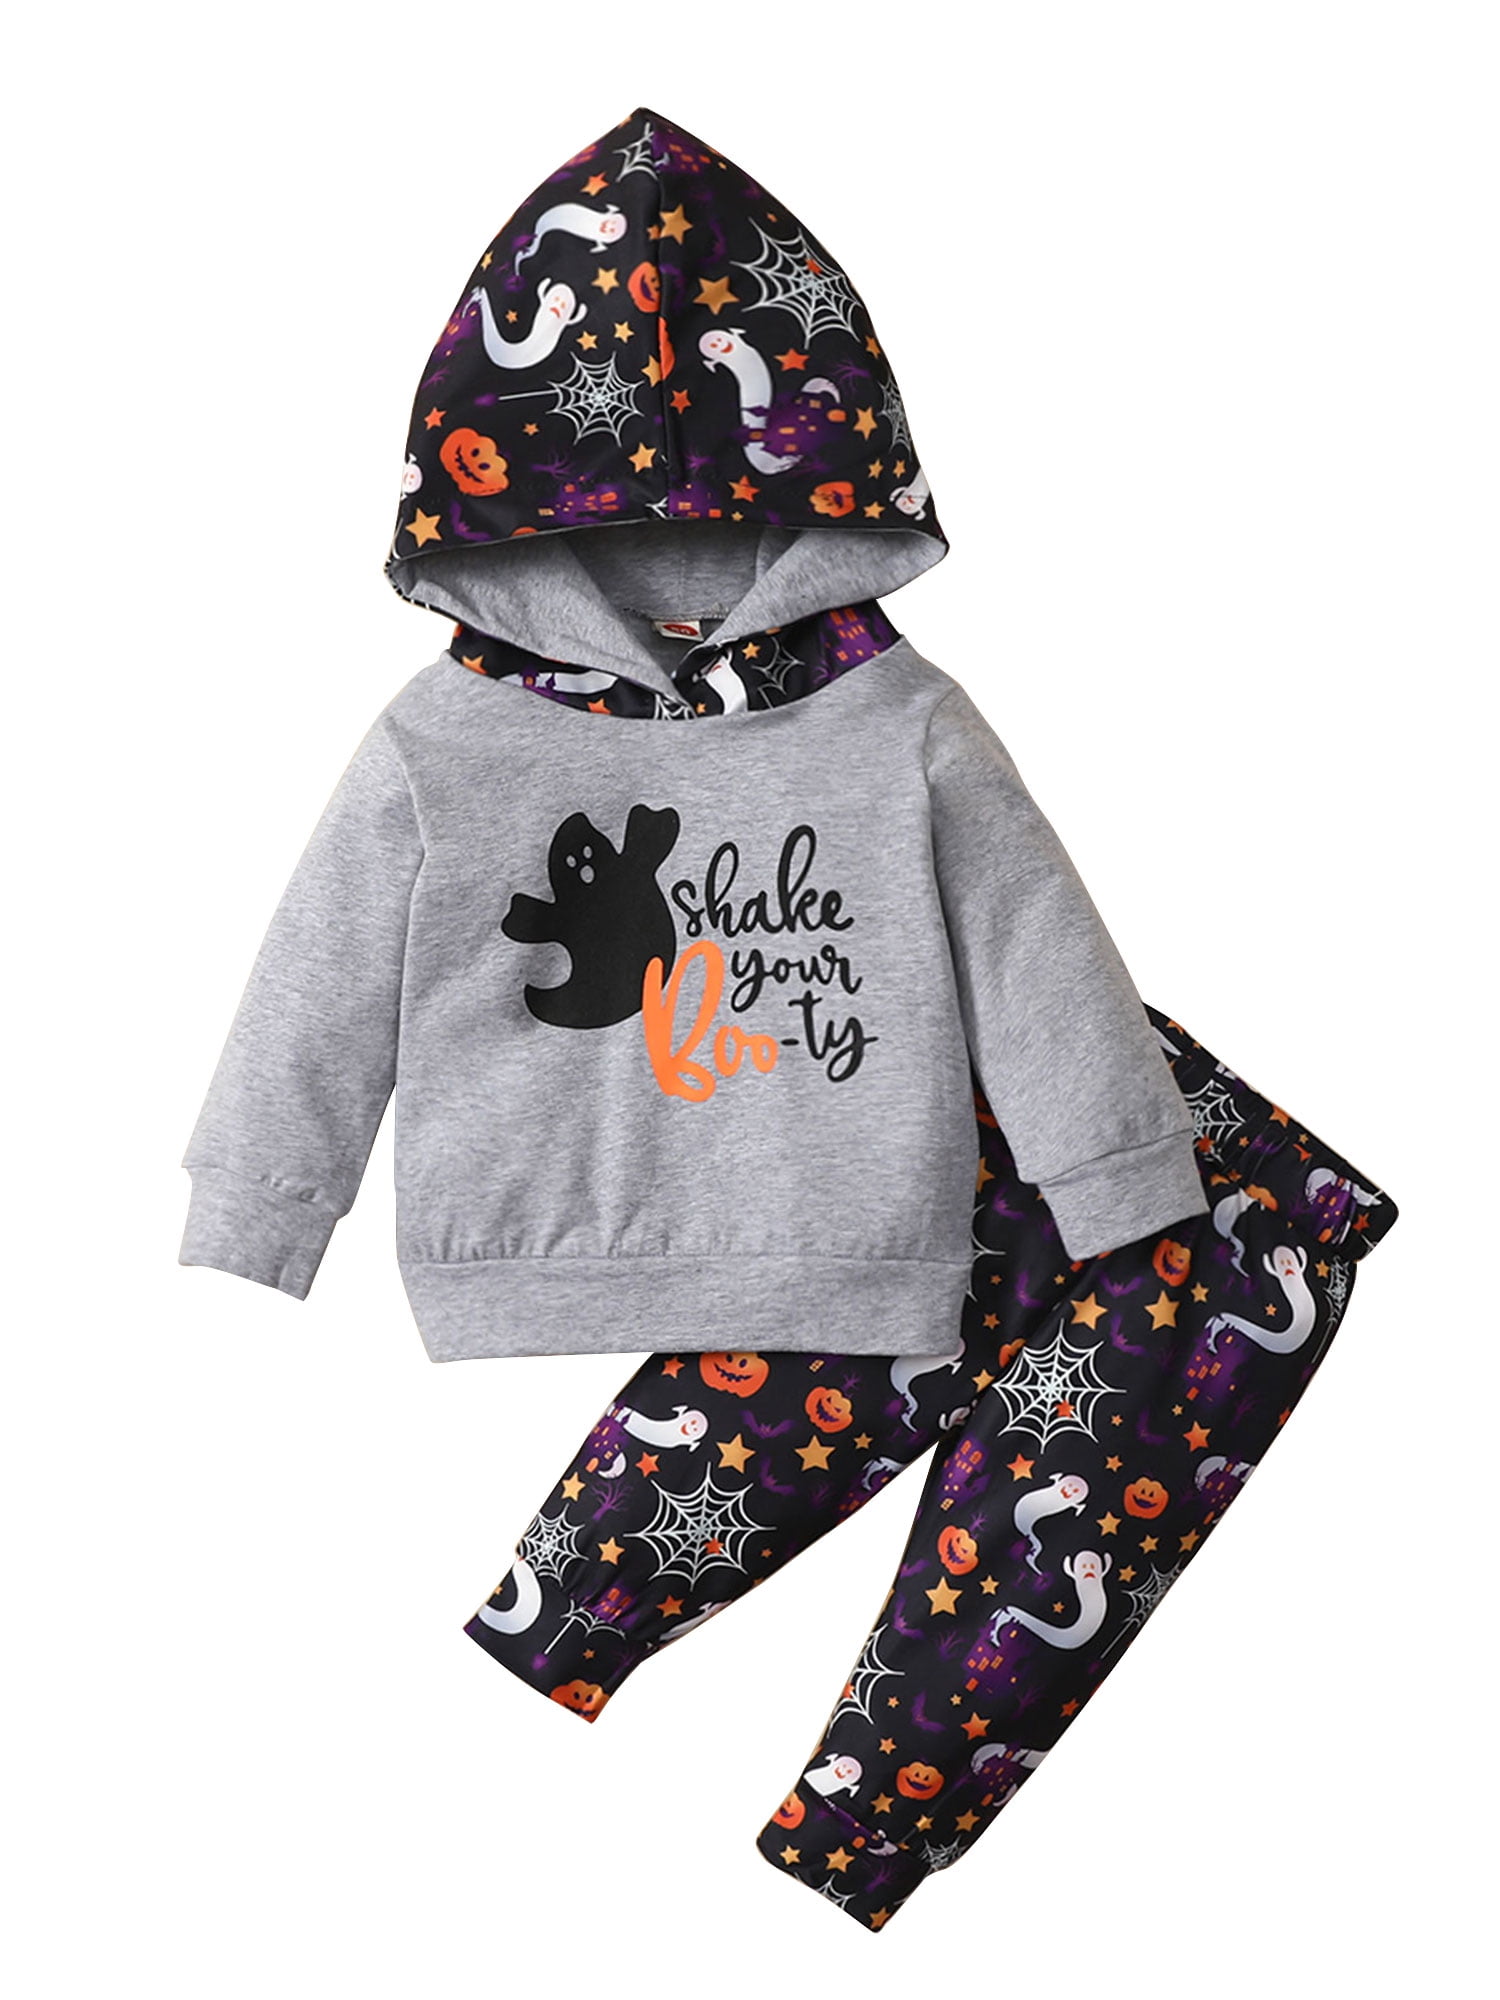 Infants Toddlers Kids Sweatsuit Boys Printed Polyester SweatPant Hoodie Top Set